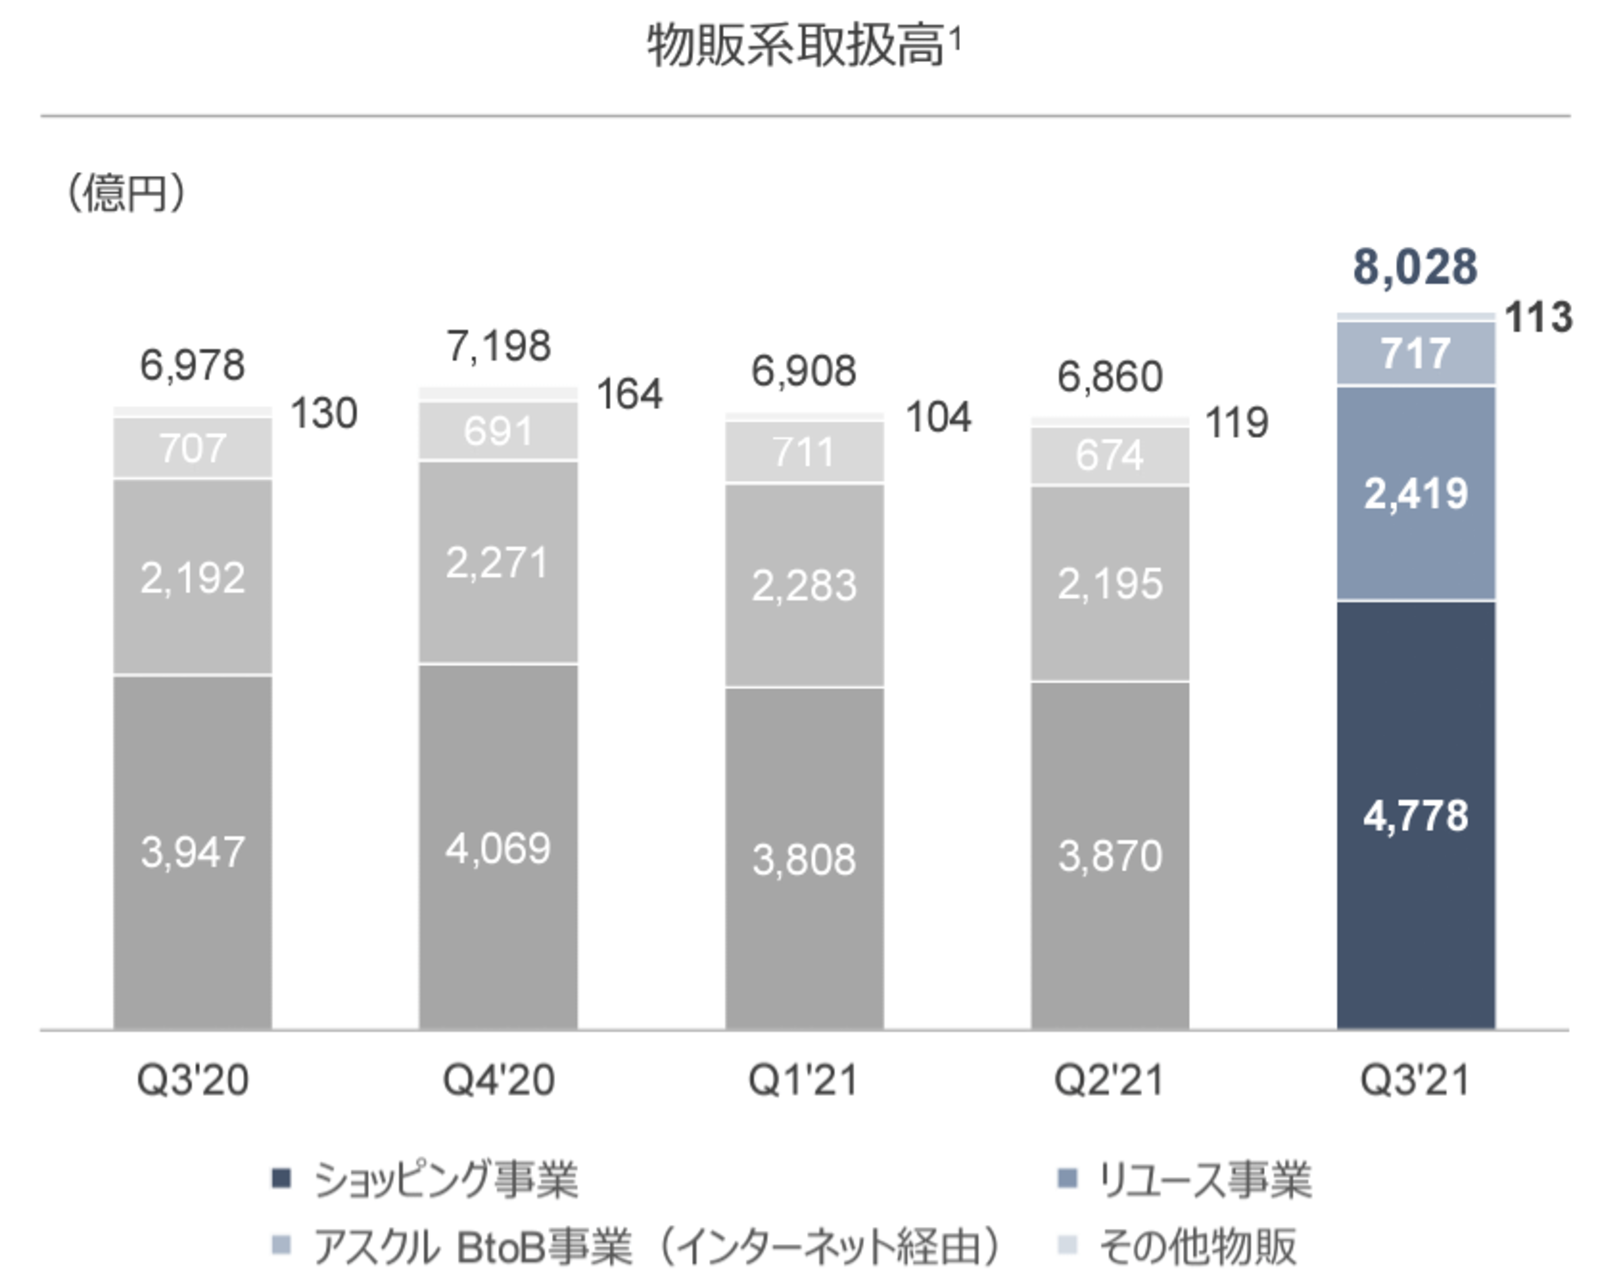 【Zホールディングス2021年3Q取扱高】ショッピング事業は約1.2兆 